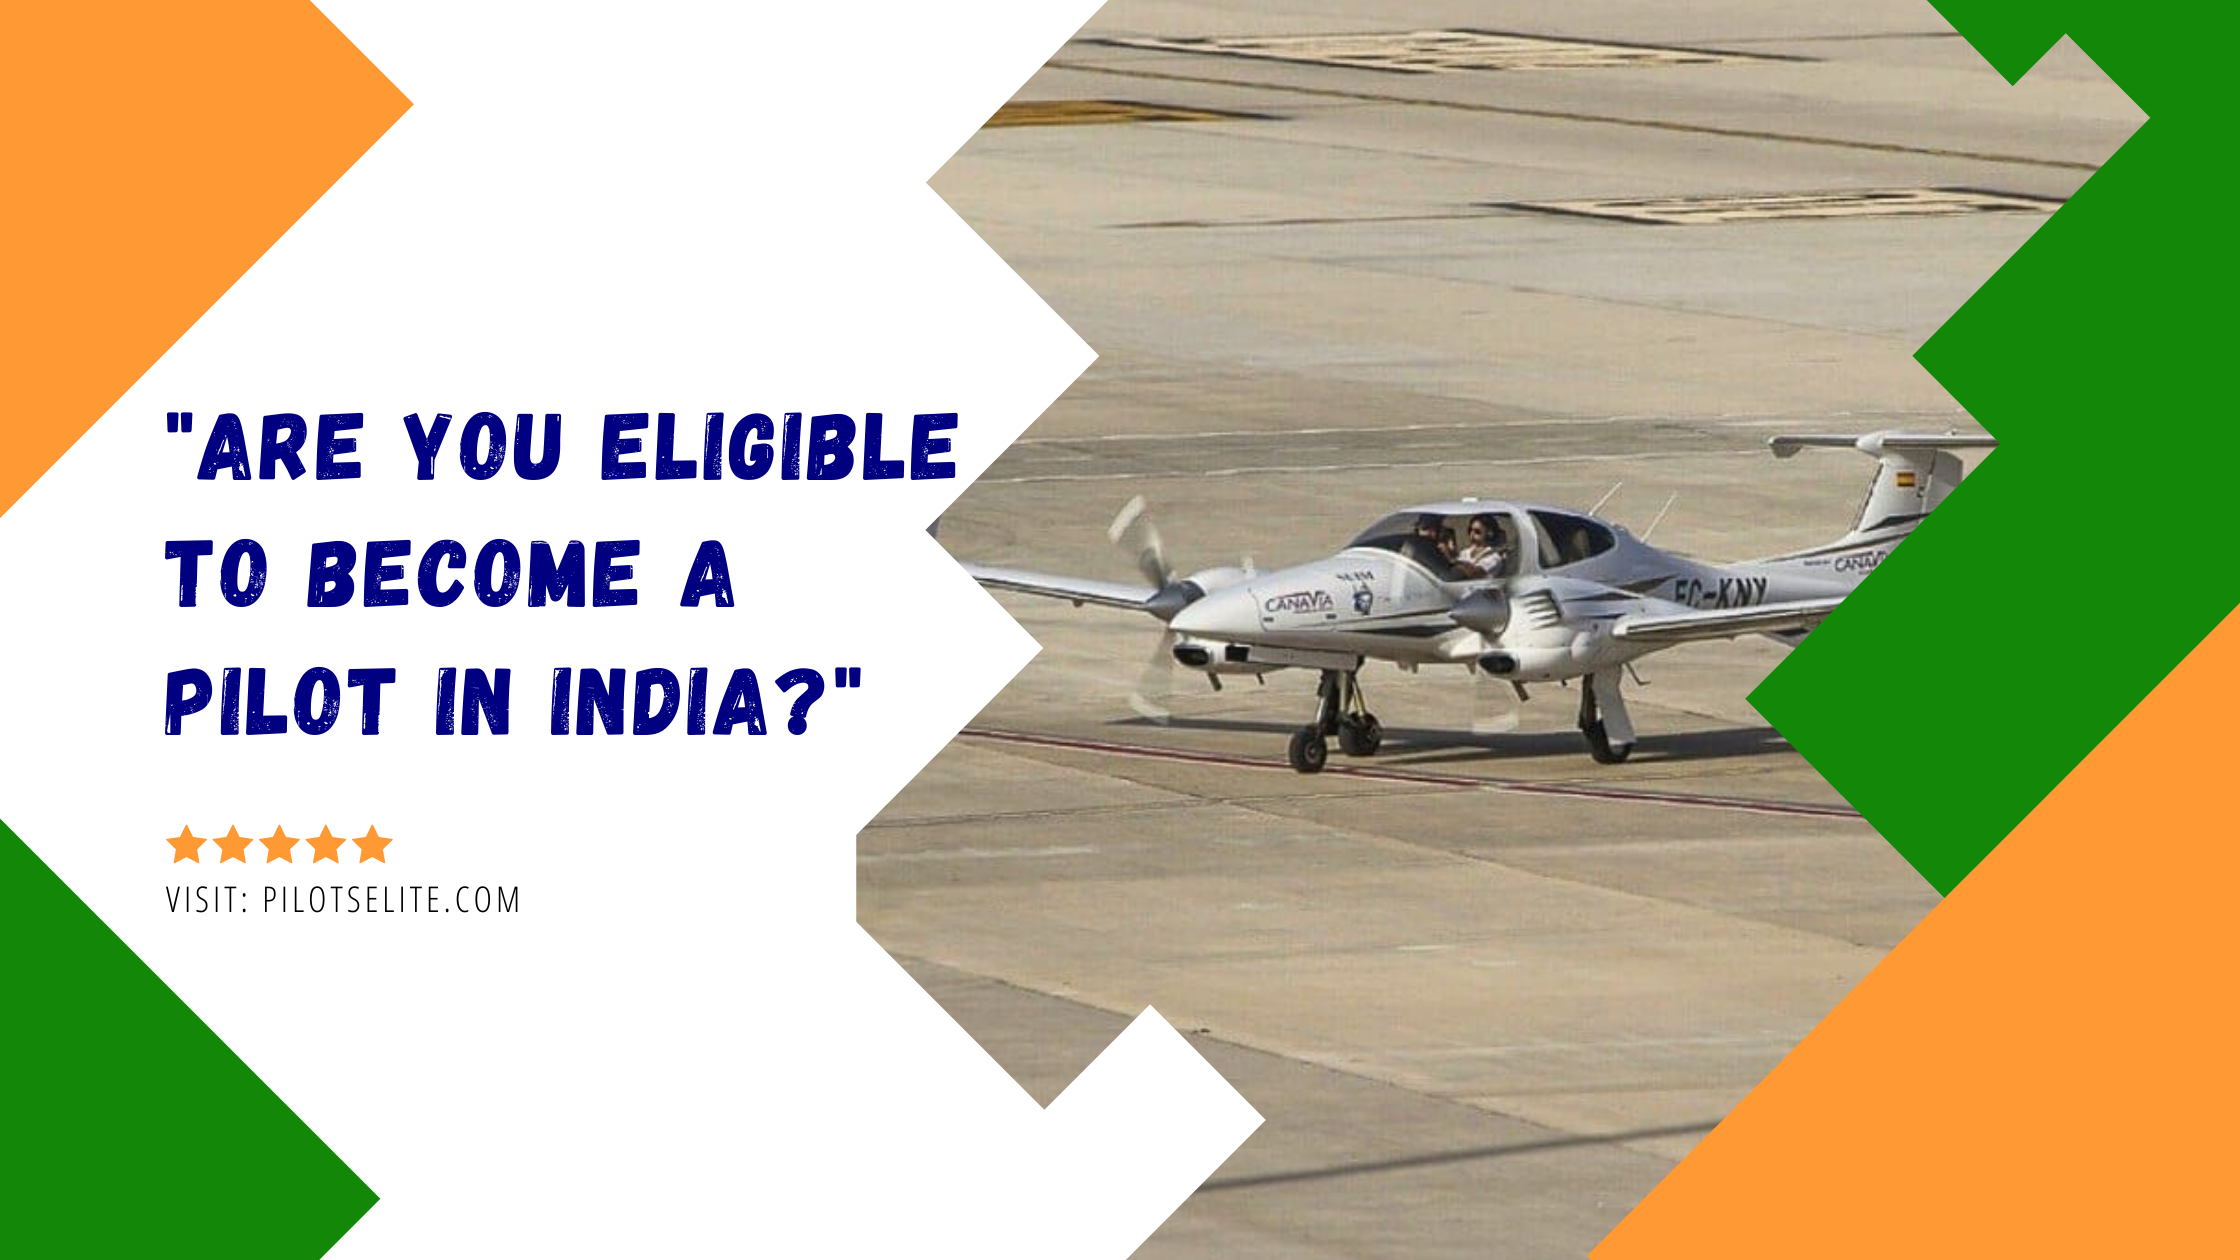 pilot training in india eligibility